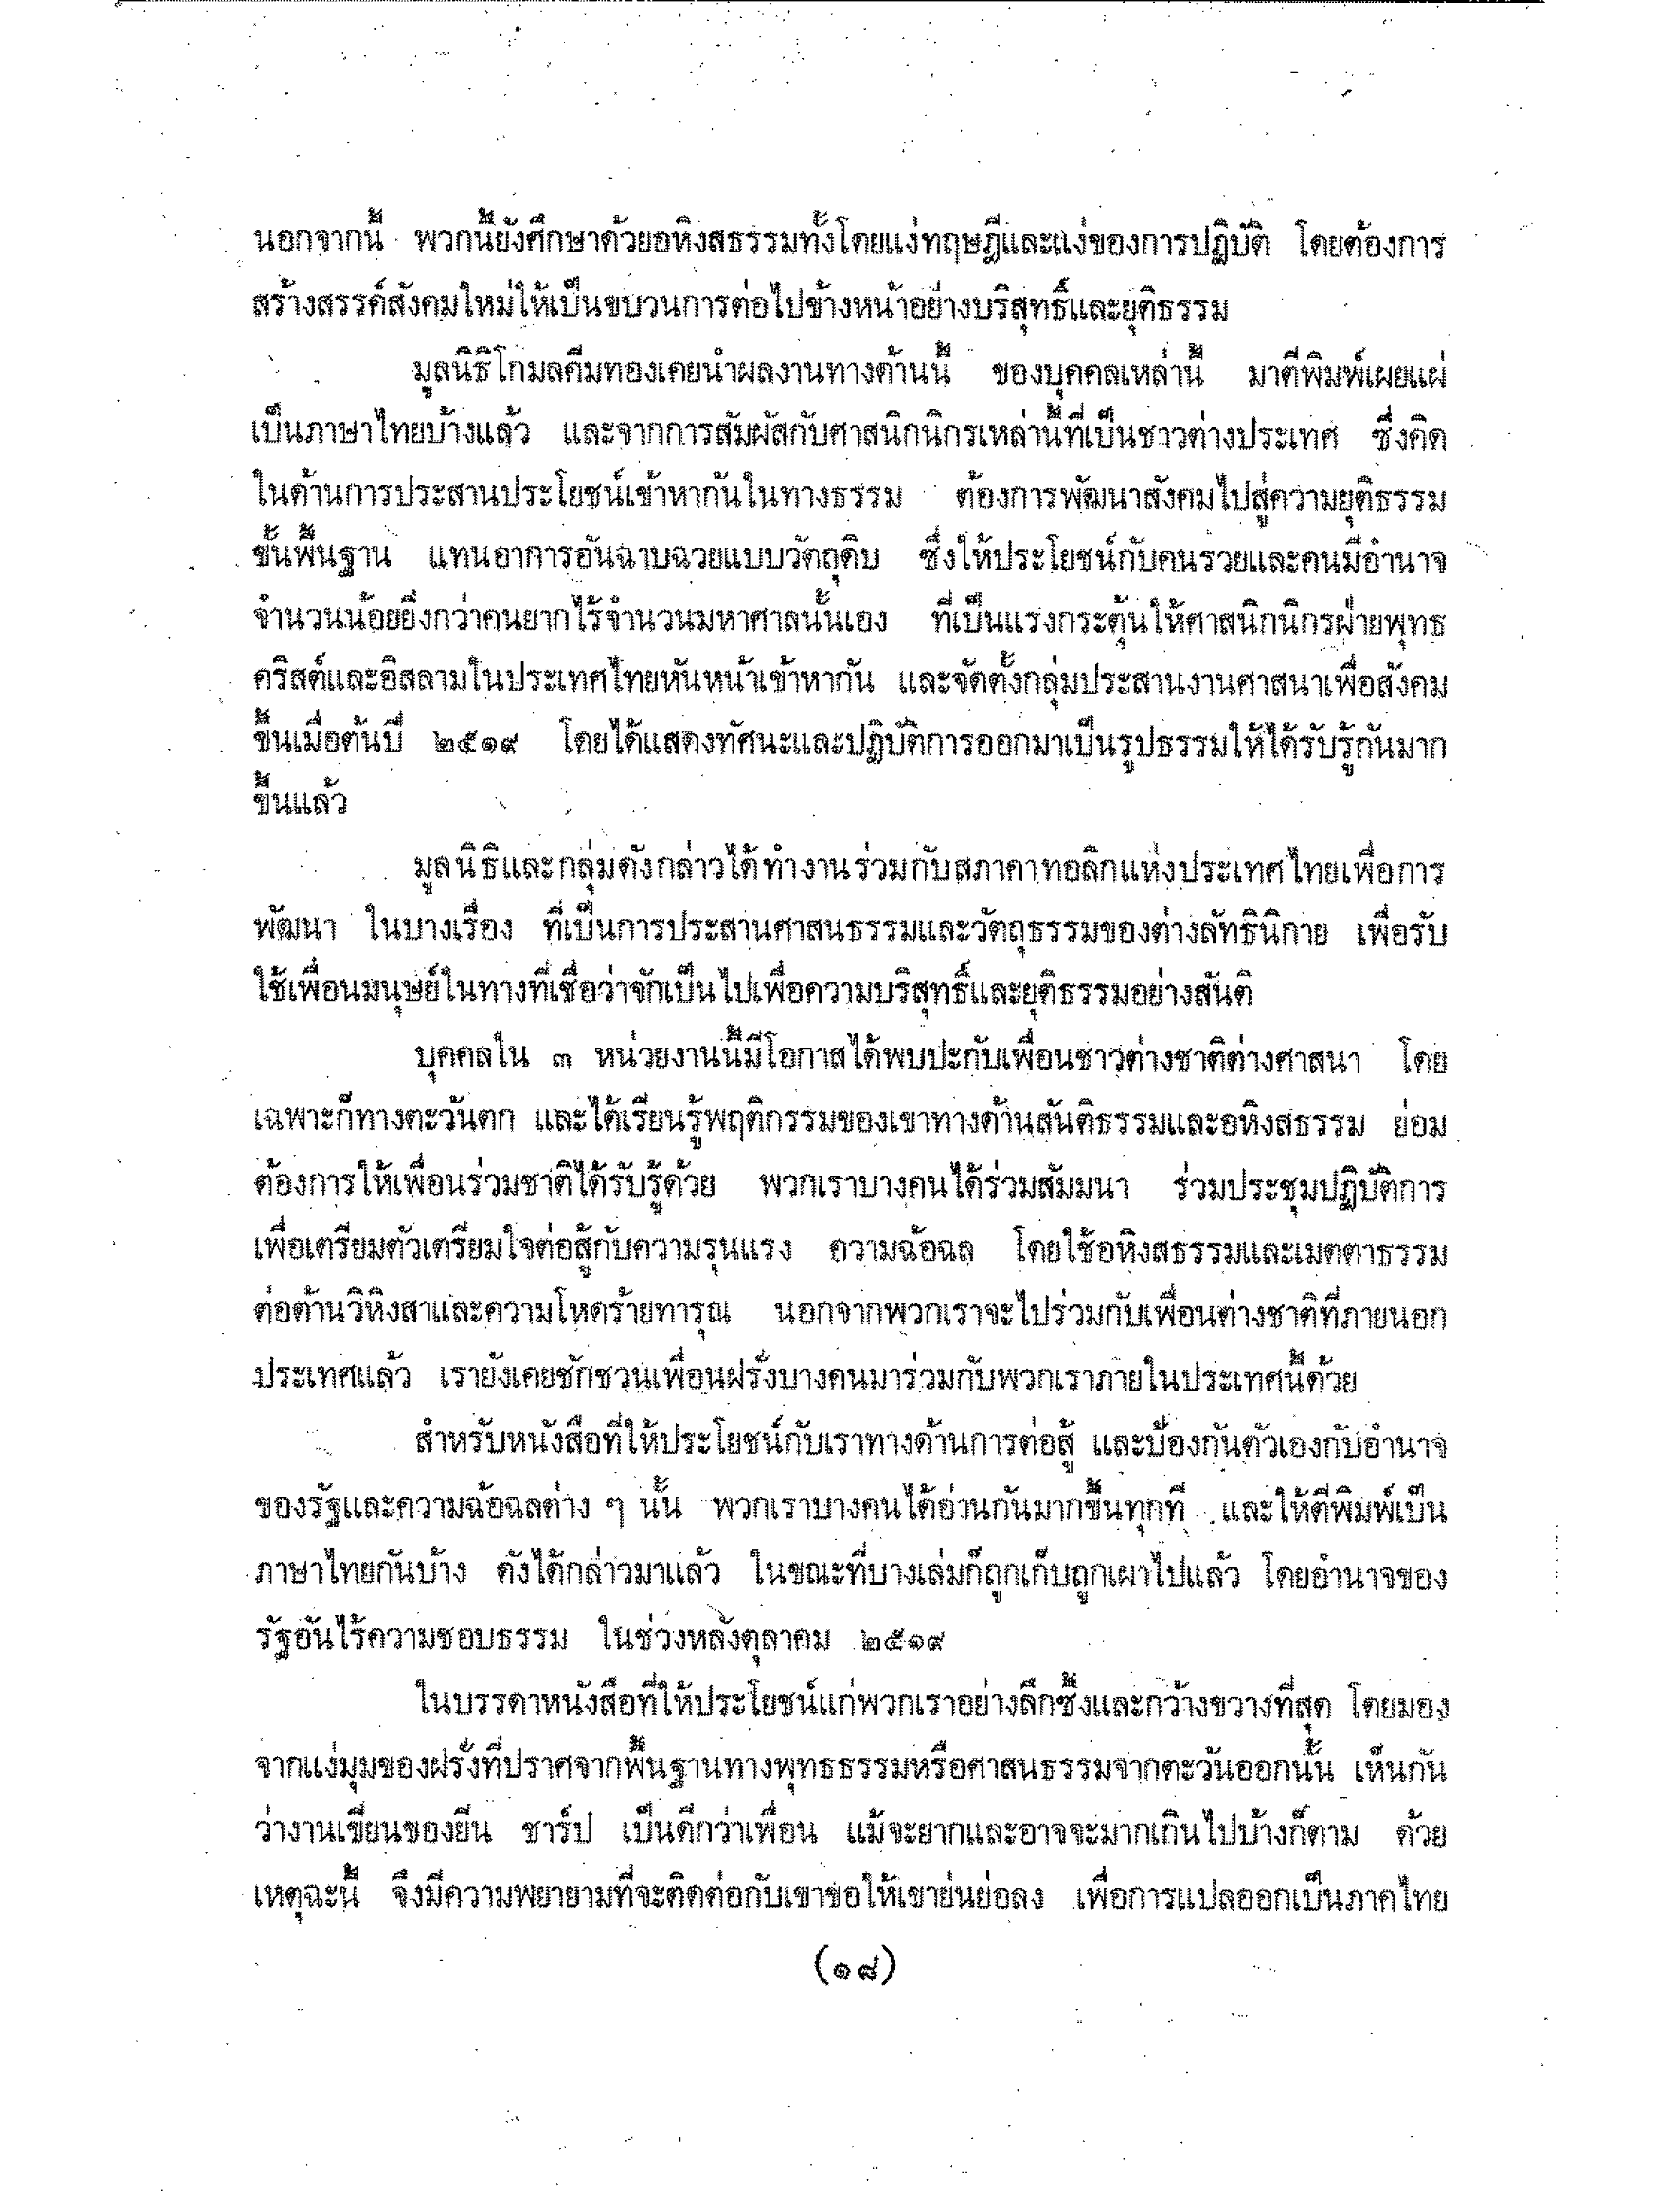 Power, Struggle, and Defense (Thai)